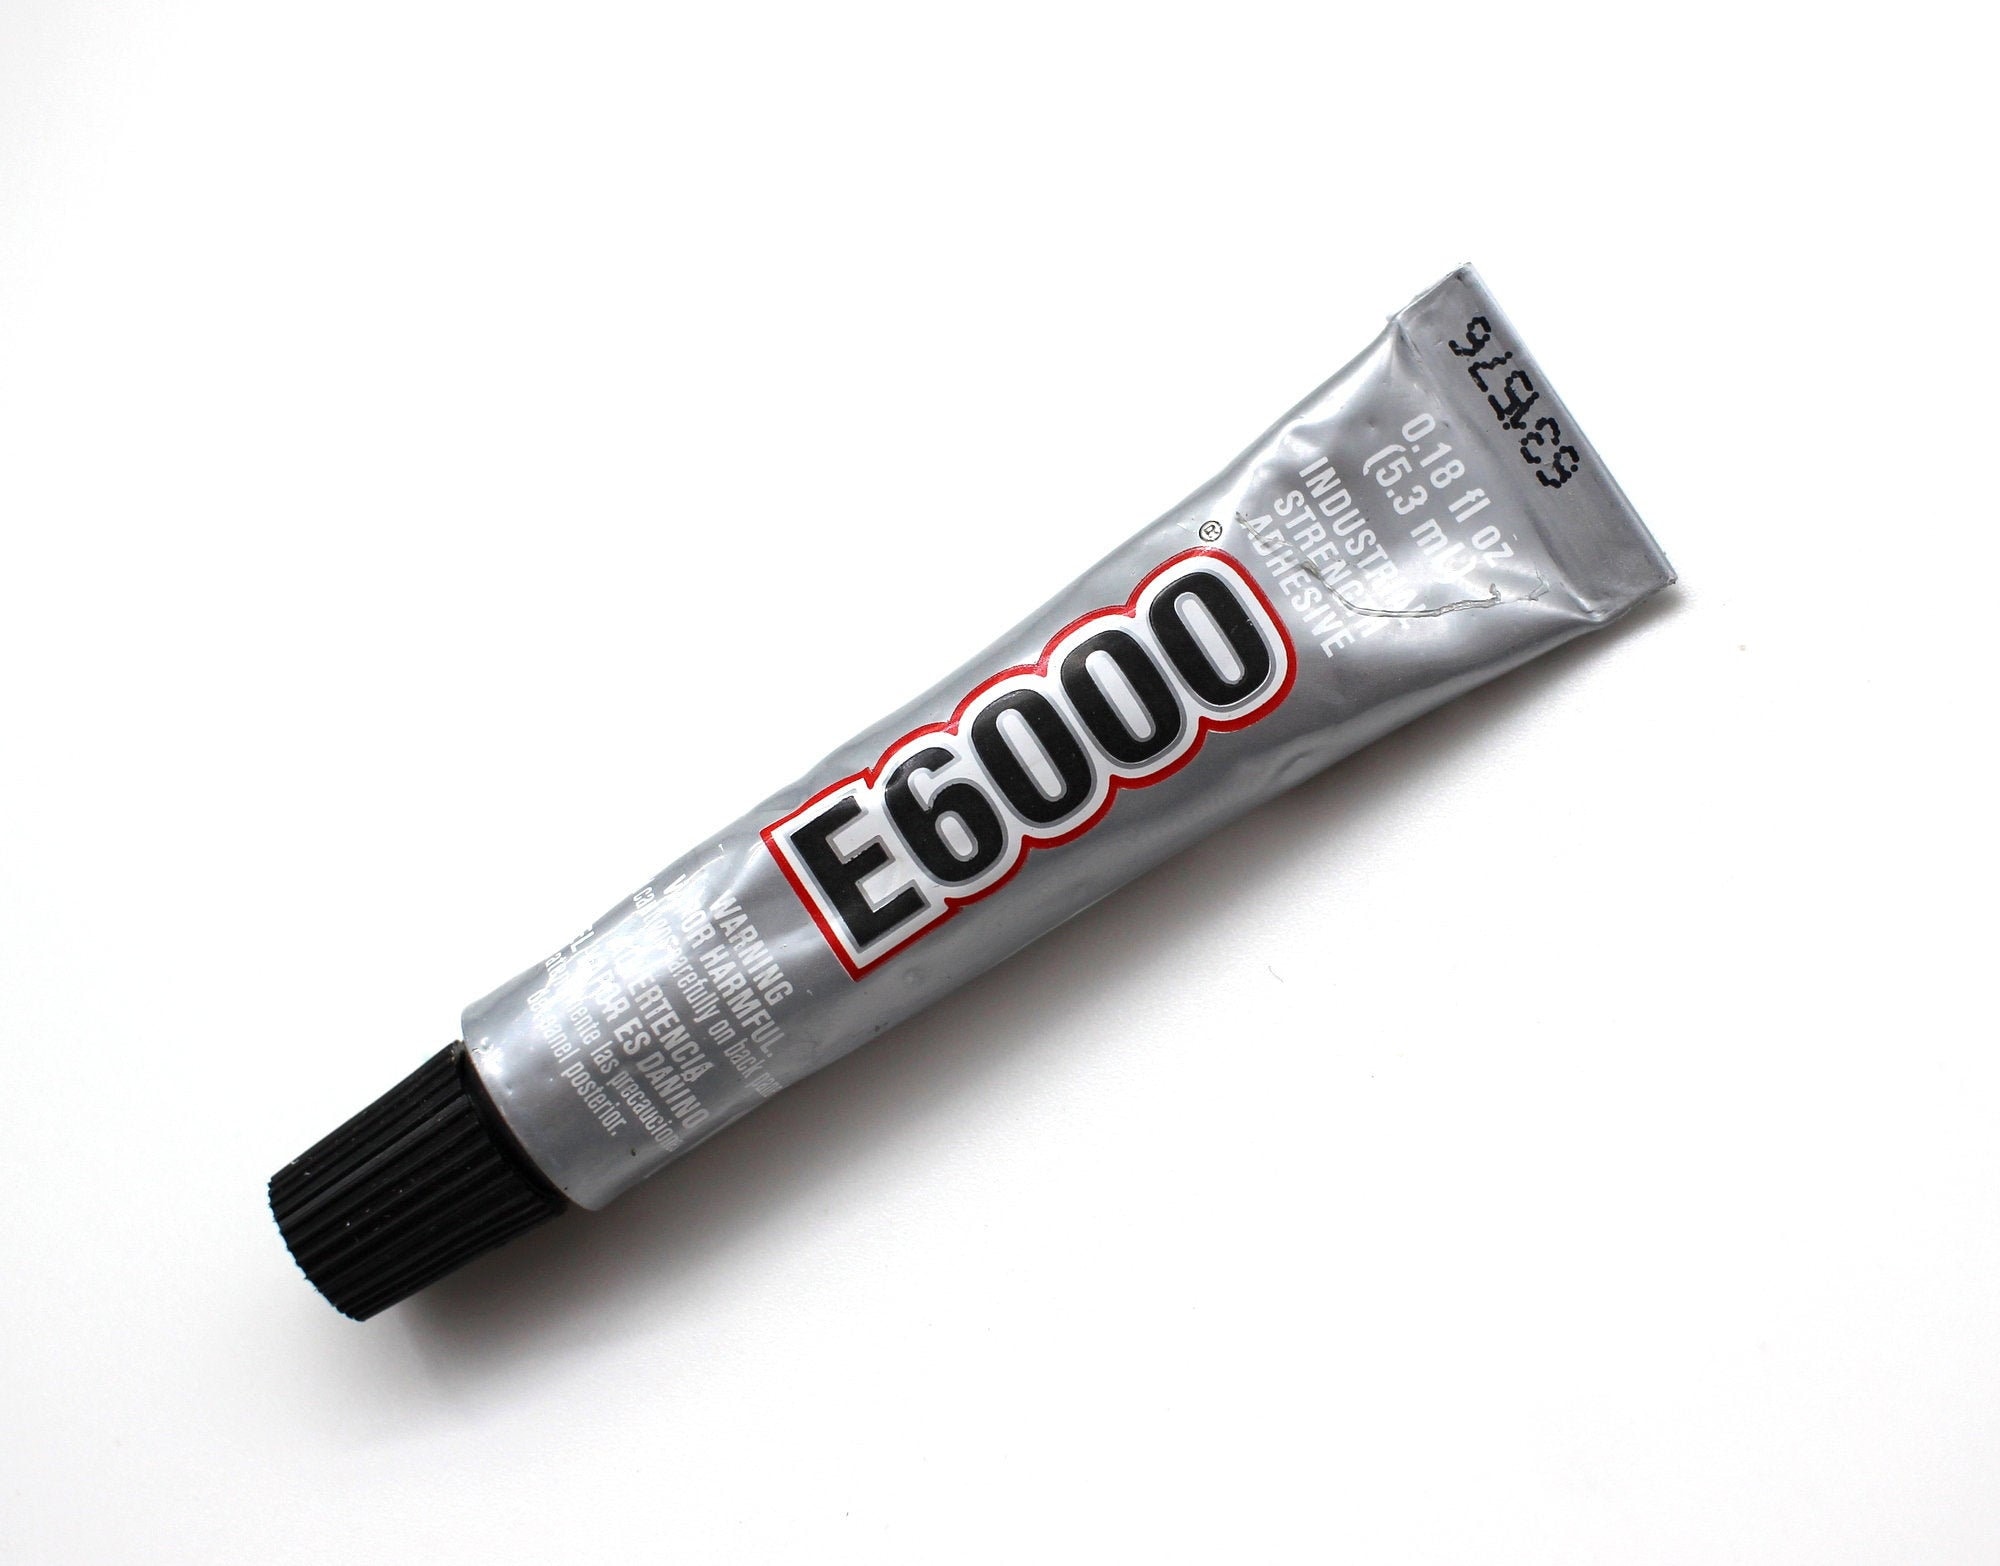  E6000 230450 Craft Adhesive, 0.18 fl oz, 50 Piece Box